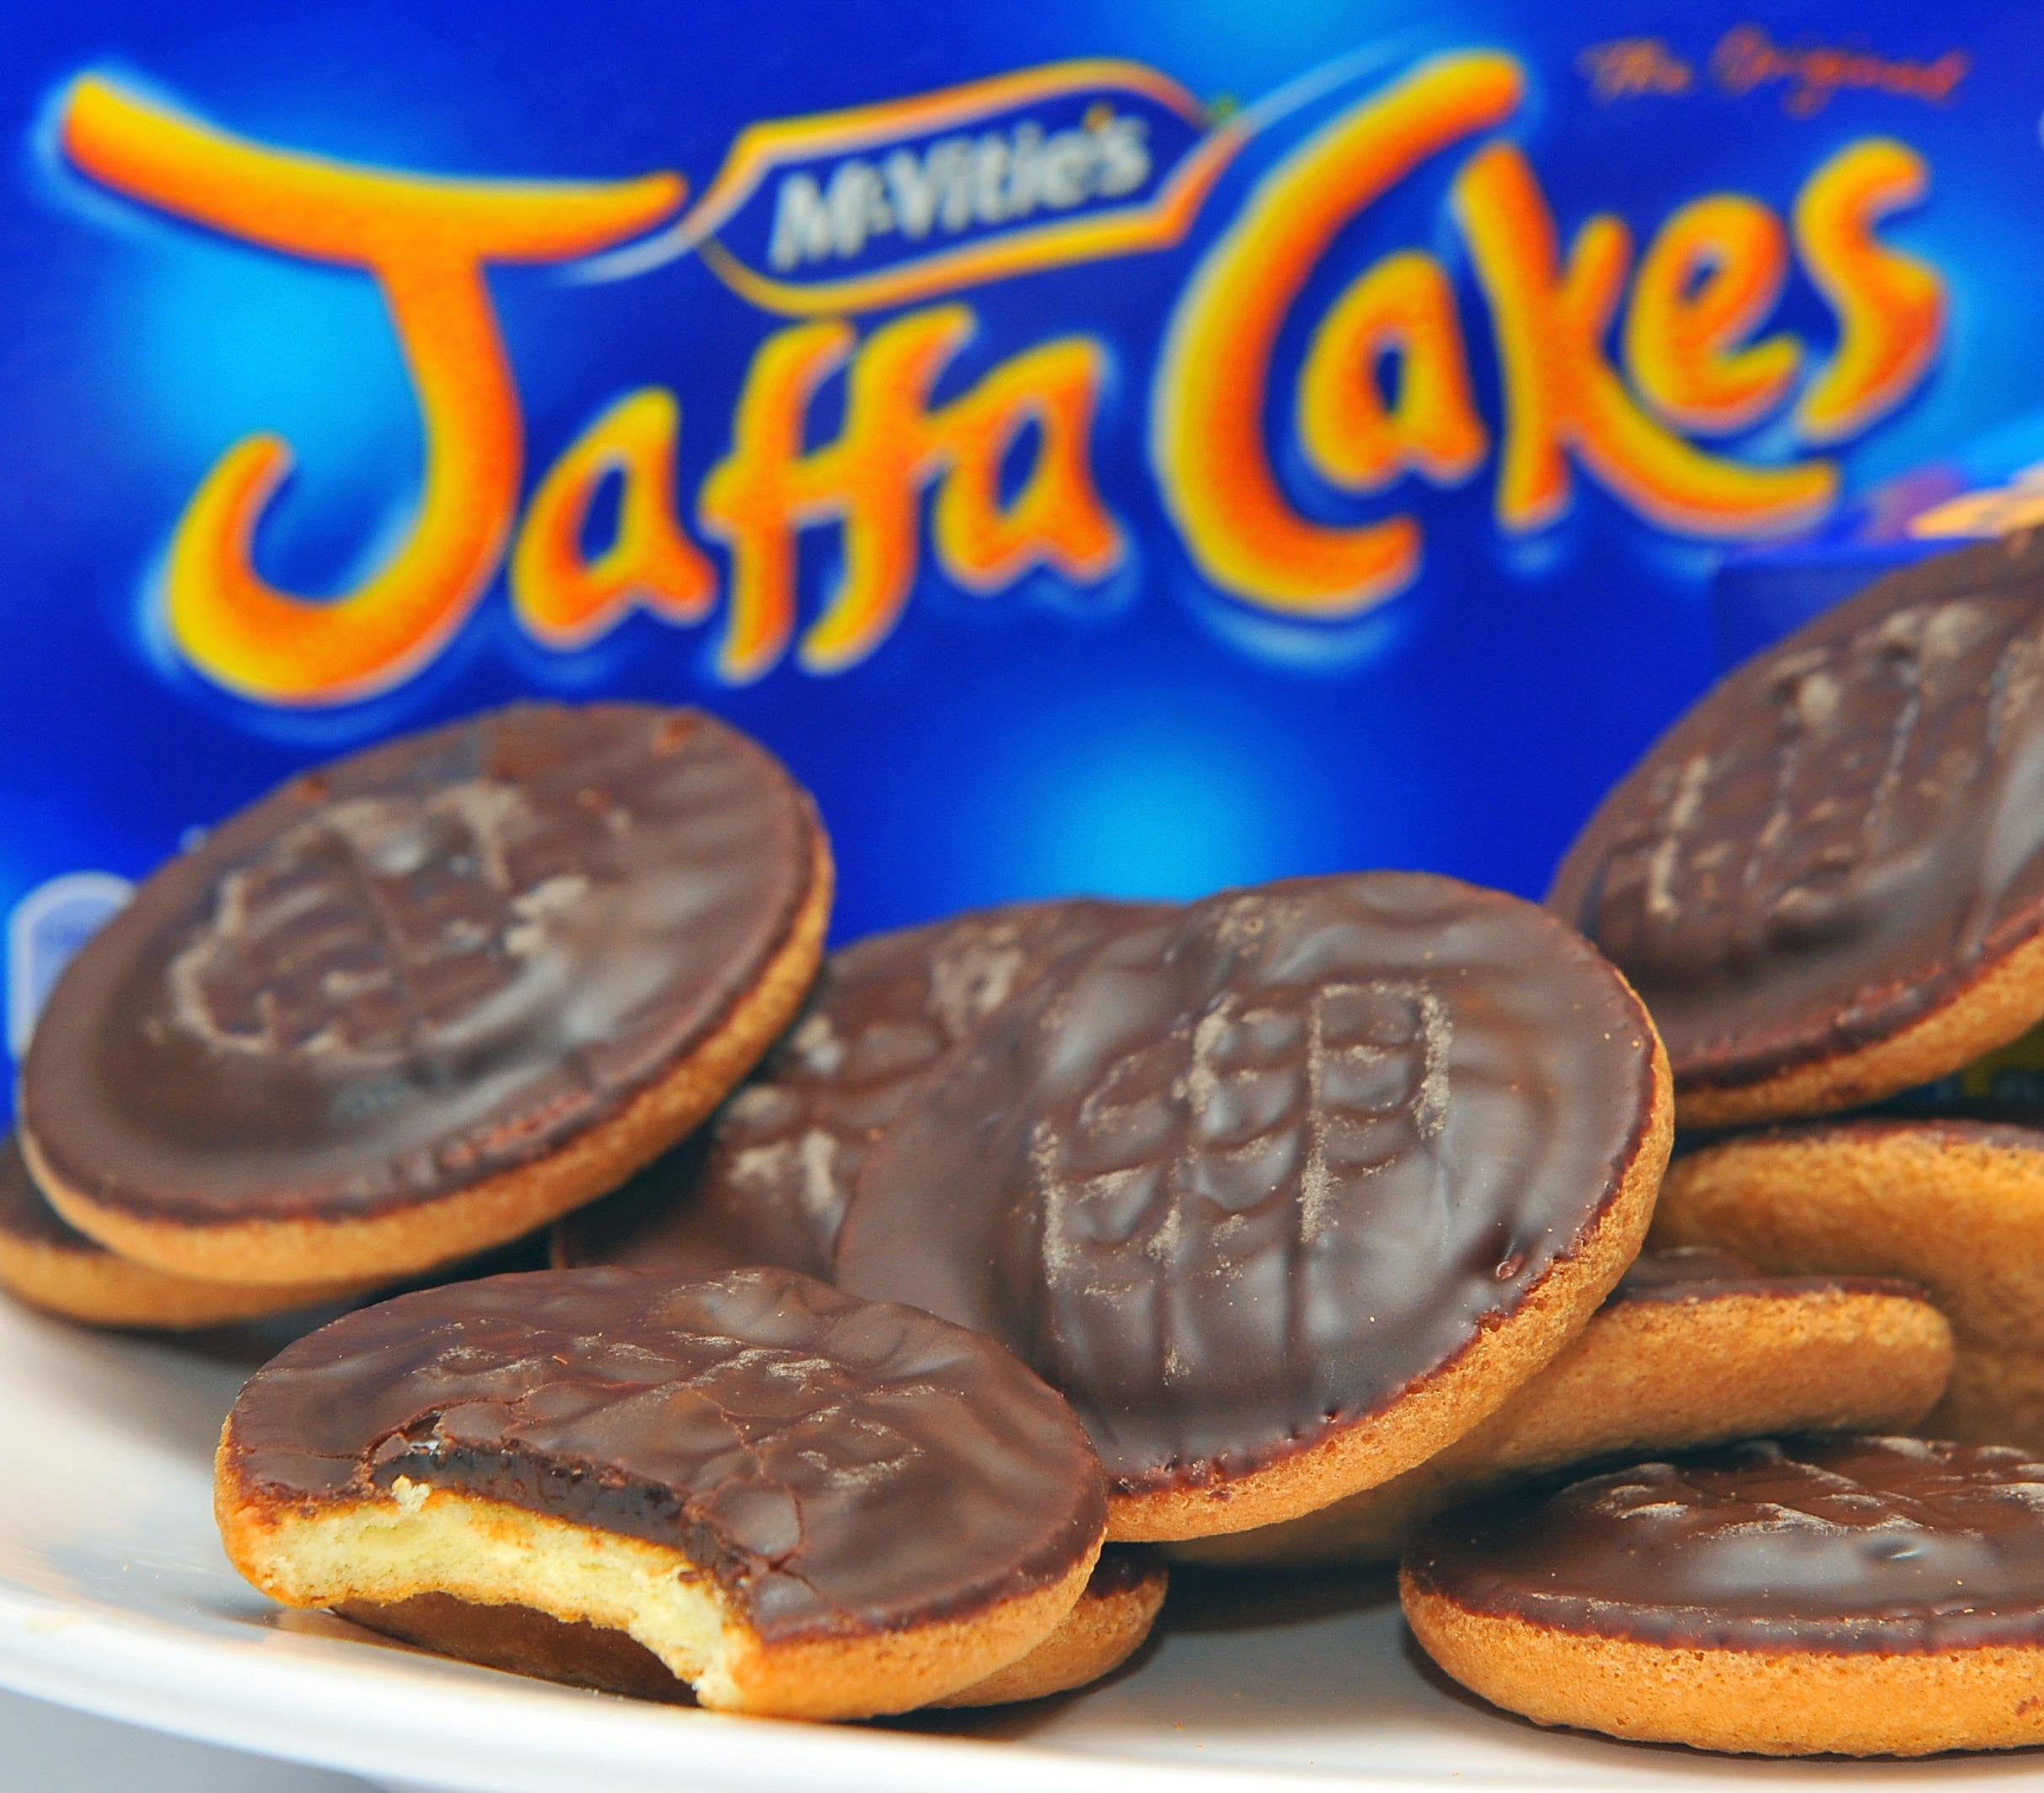 Nicola Sturgeon's claim that Jaffa Cakes are biscuits is False